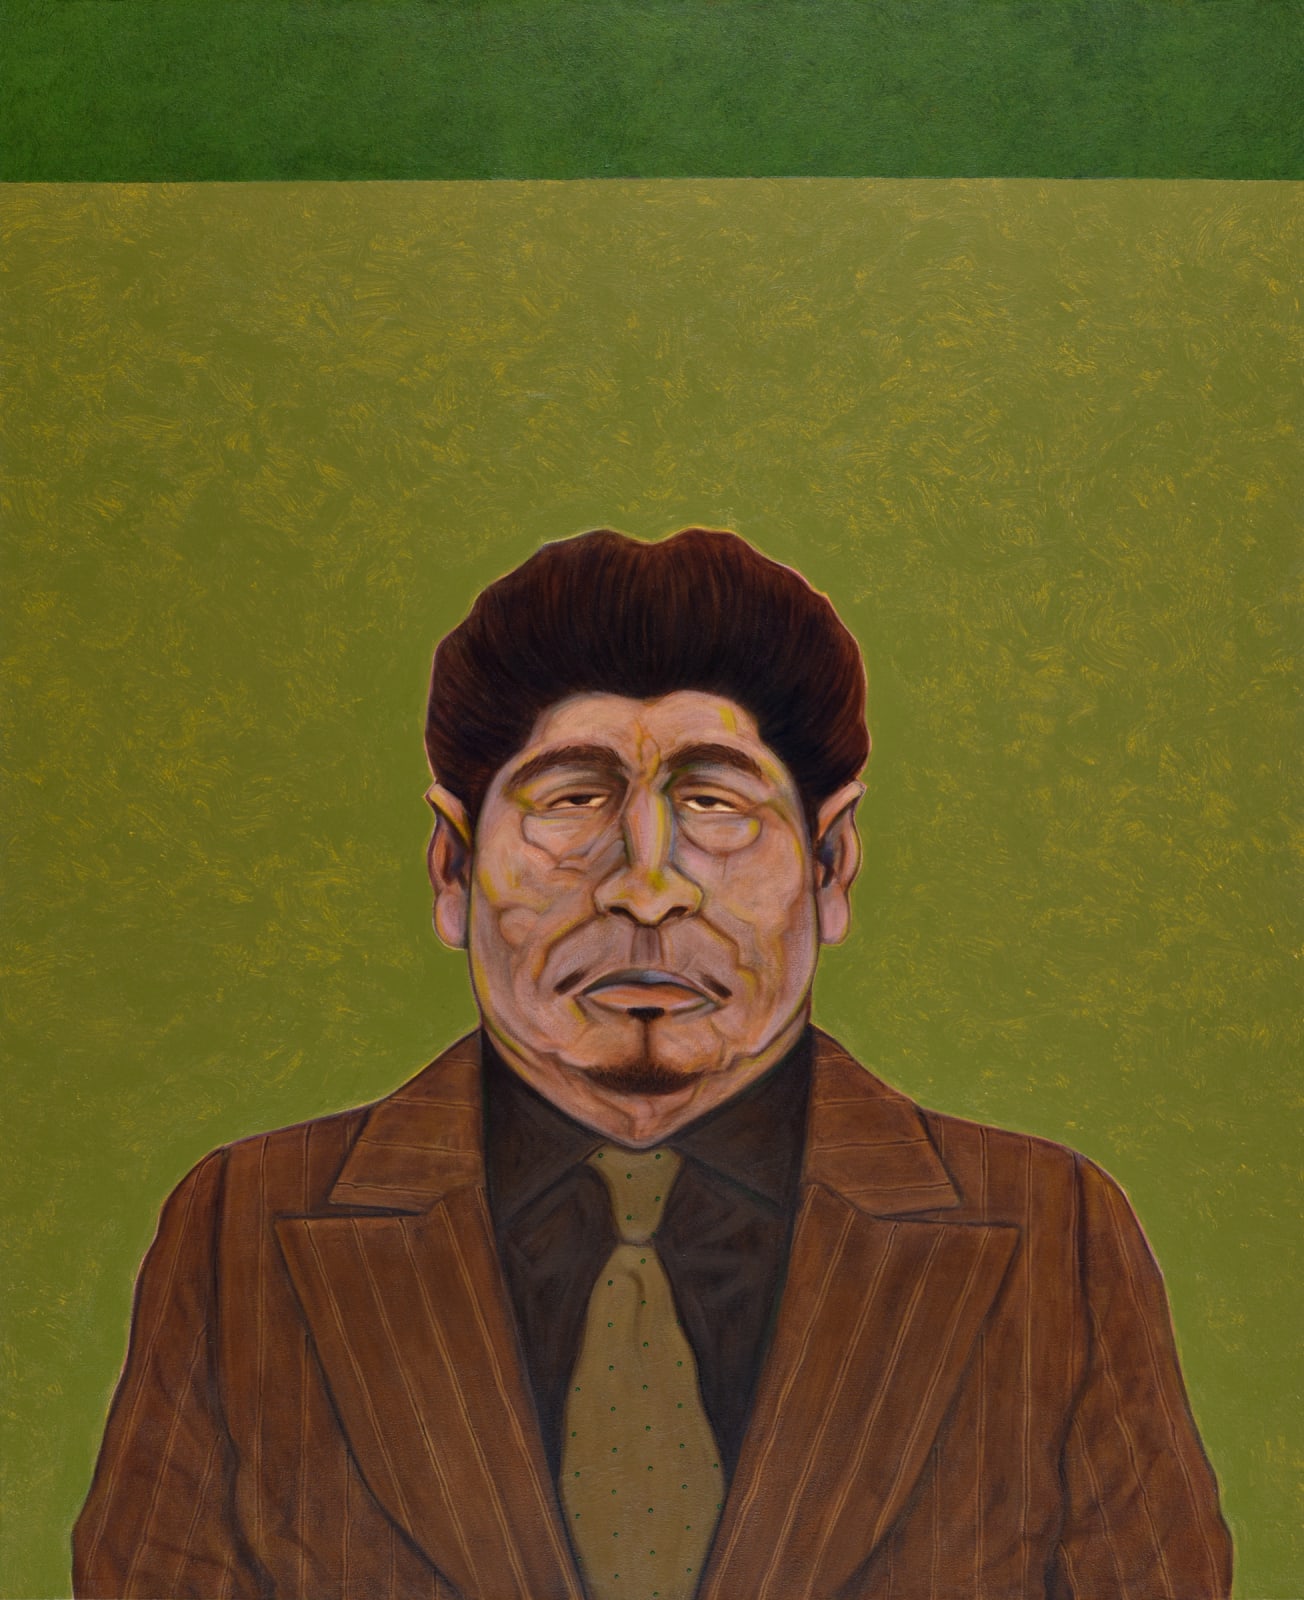 César A. Martínez Veterano, 2020 Acrylic on canvas 54 x 44 x 1.75 in 137.16 x 111.76 x 4.445 cm